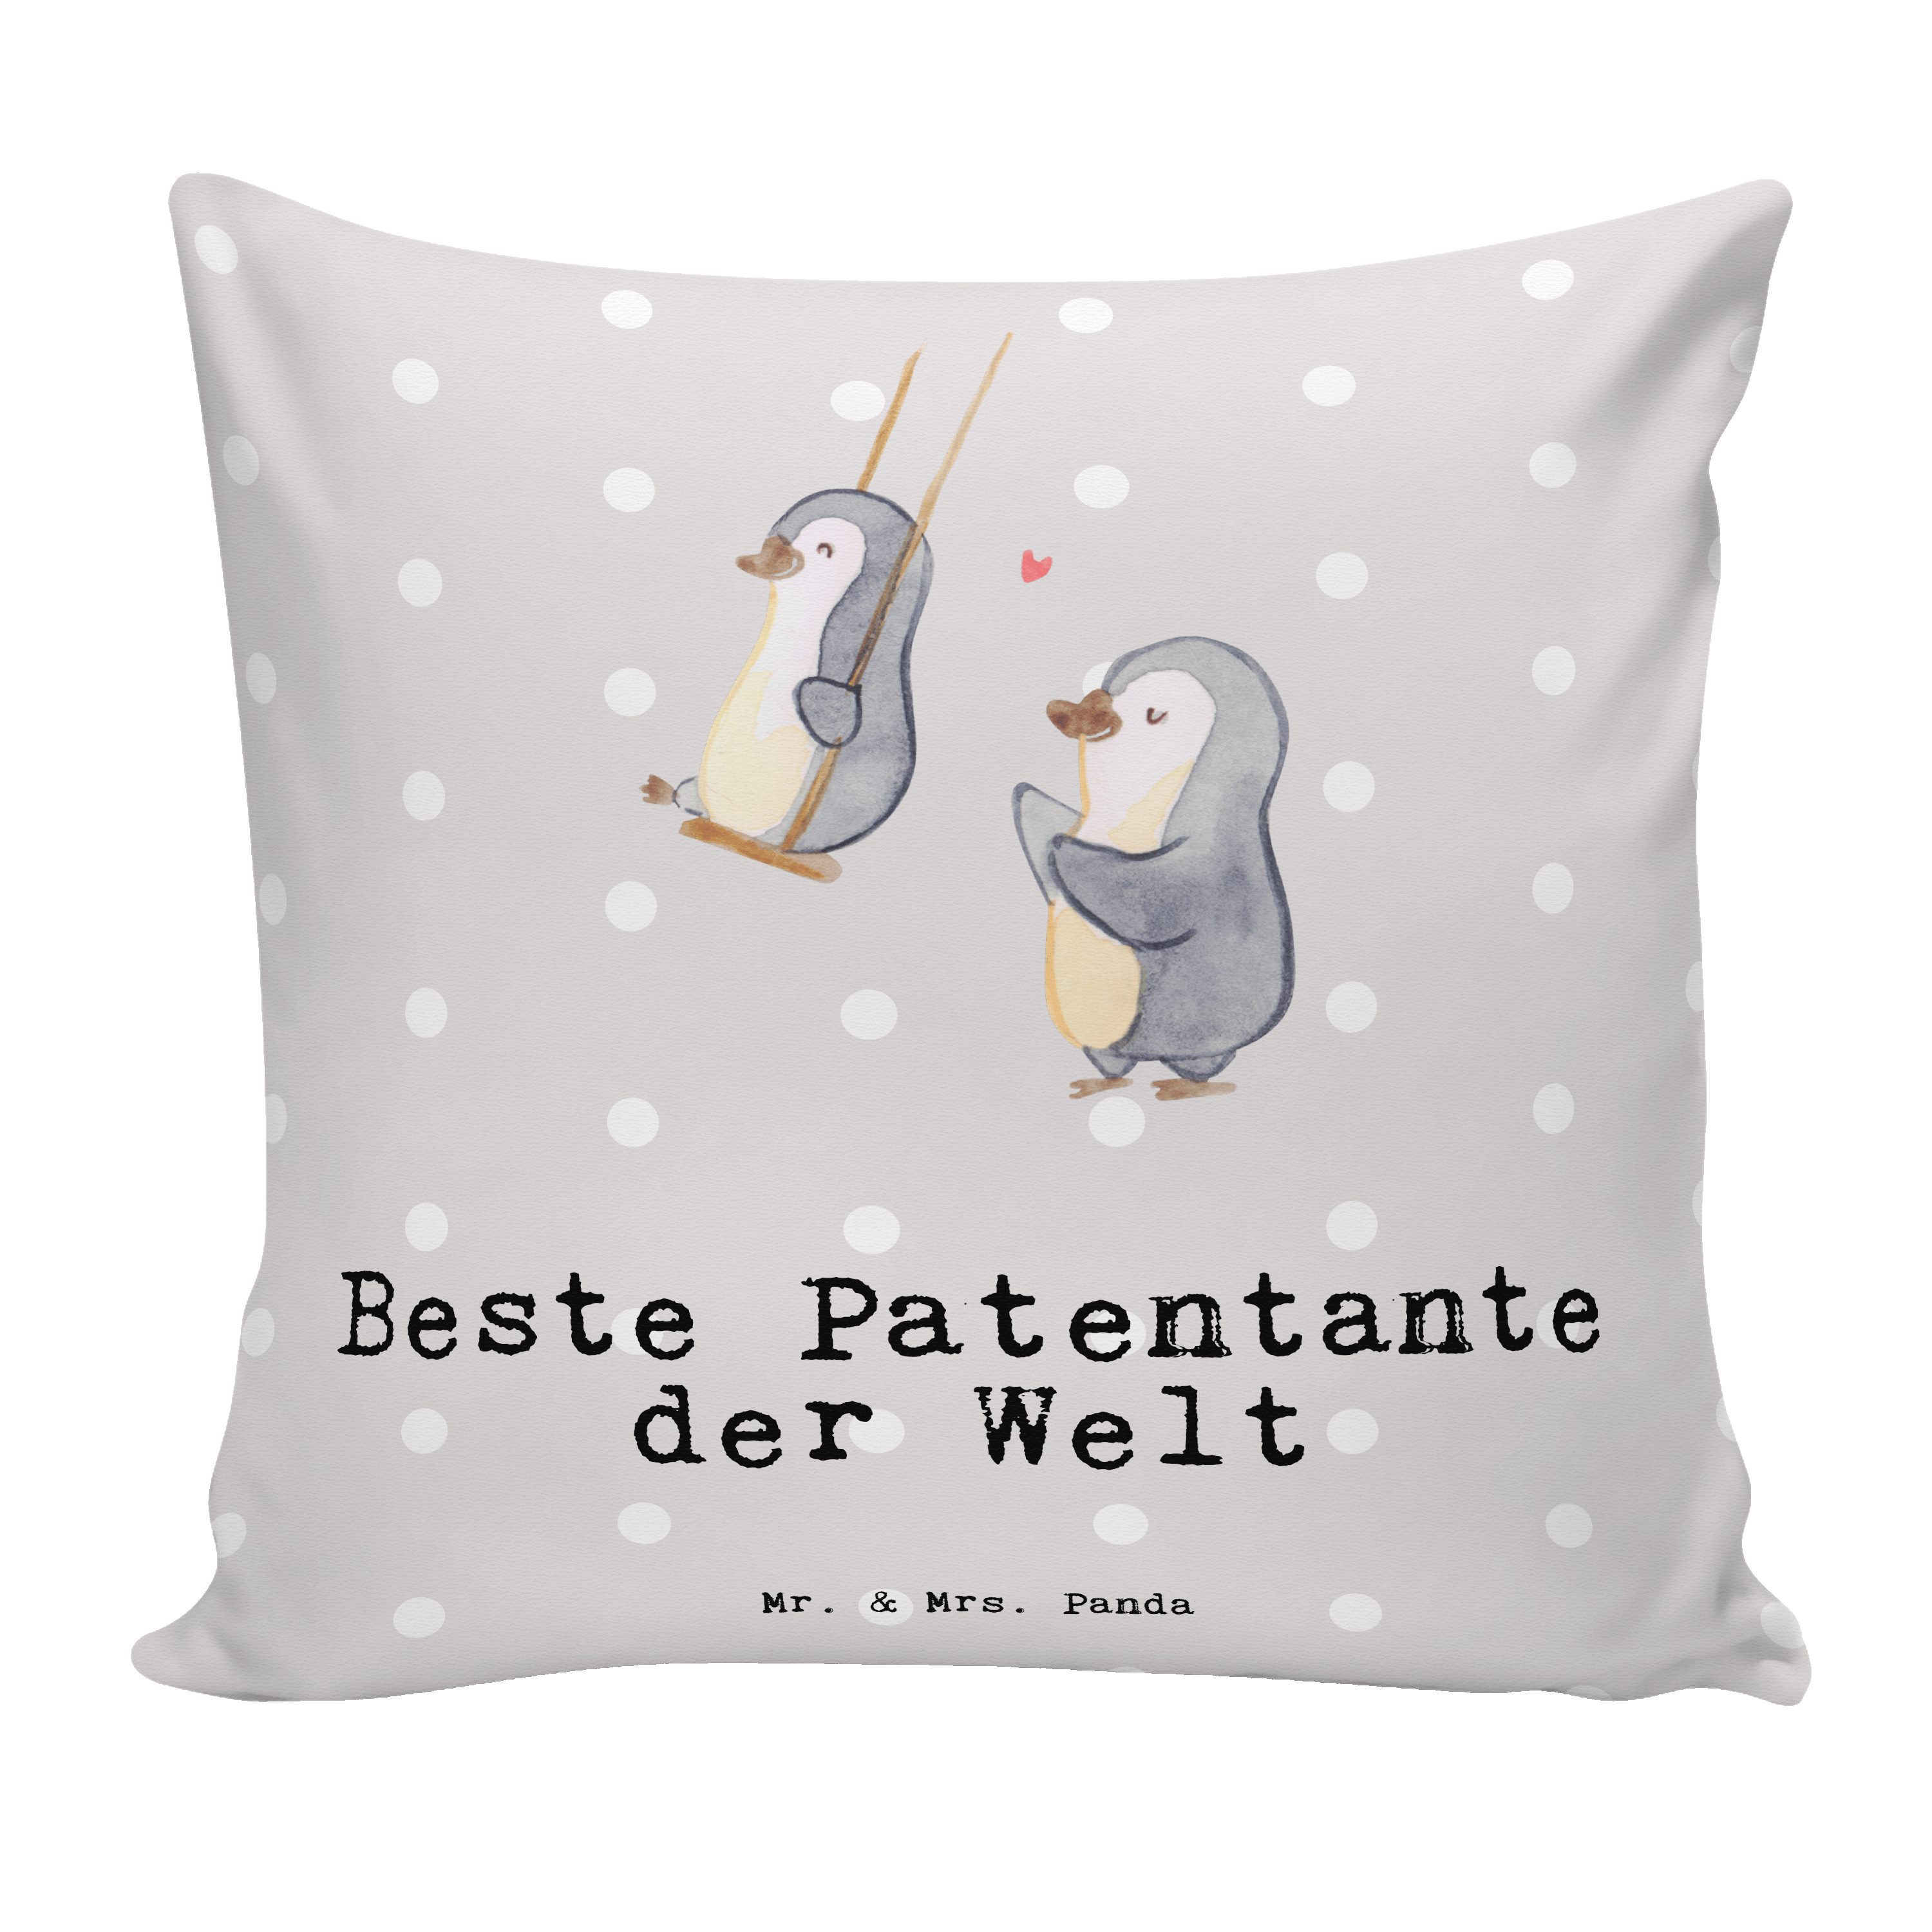 Mr. & Mrs. Panda Dekokissen Pinguin Beste Patentante der Welt - Grau Pastell - Geschenk, Sofakiss